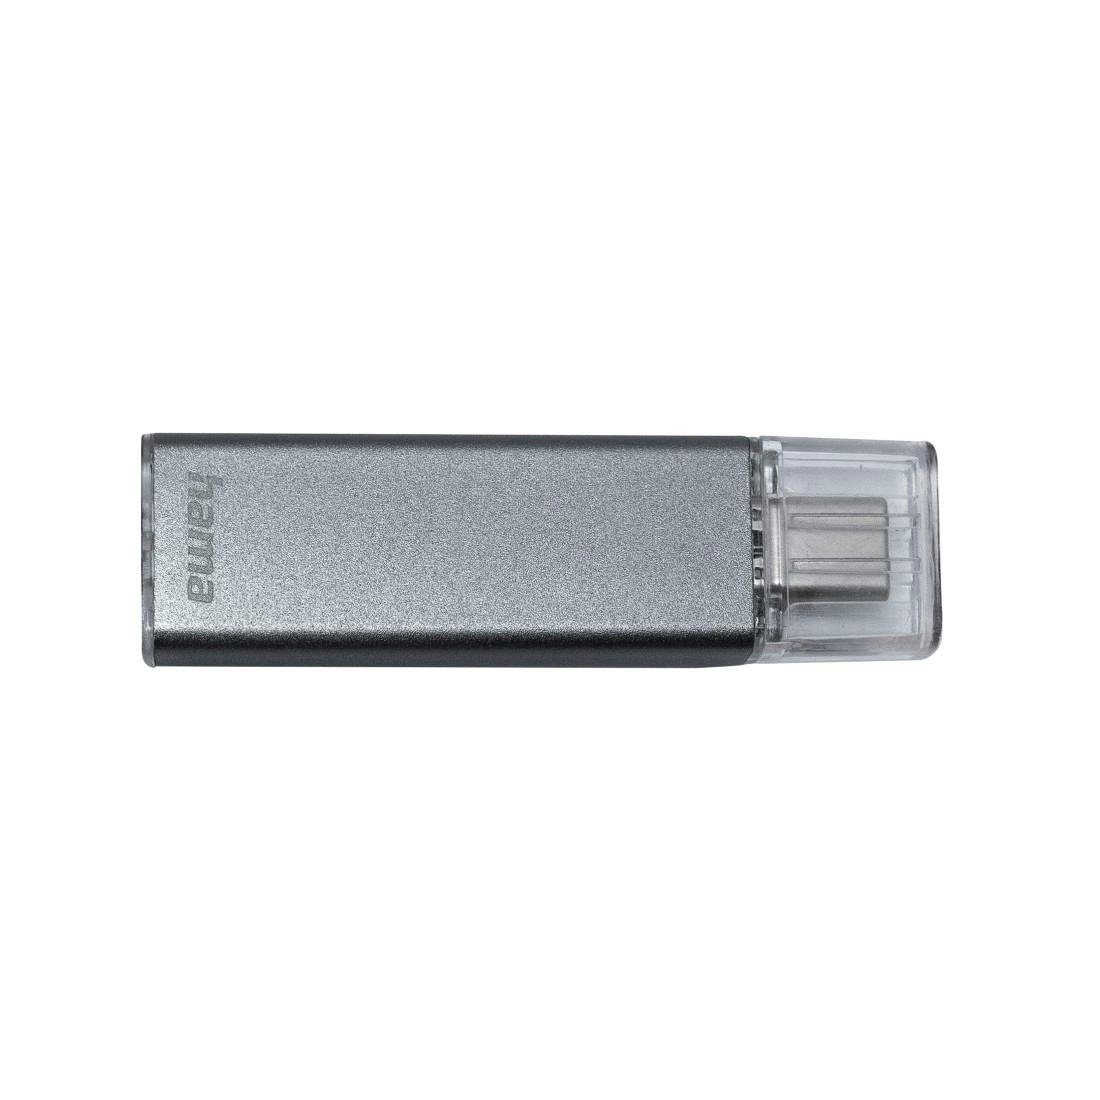 Hama USB-Stick "Uni-C Classic", USB-C 3.1, 32GB, 70 MB/s, Anthrazit USB- Stick (Lesegeschwindigkeit 70 MB/s)